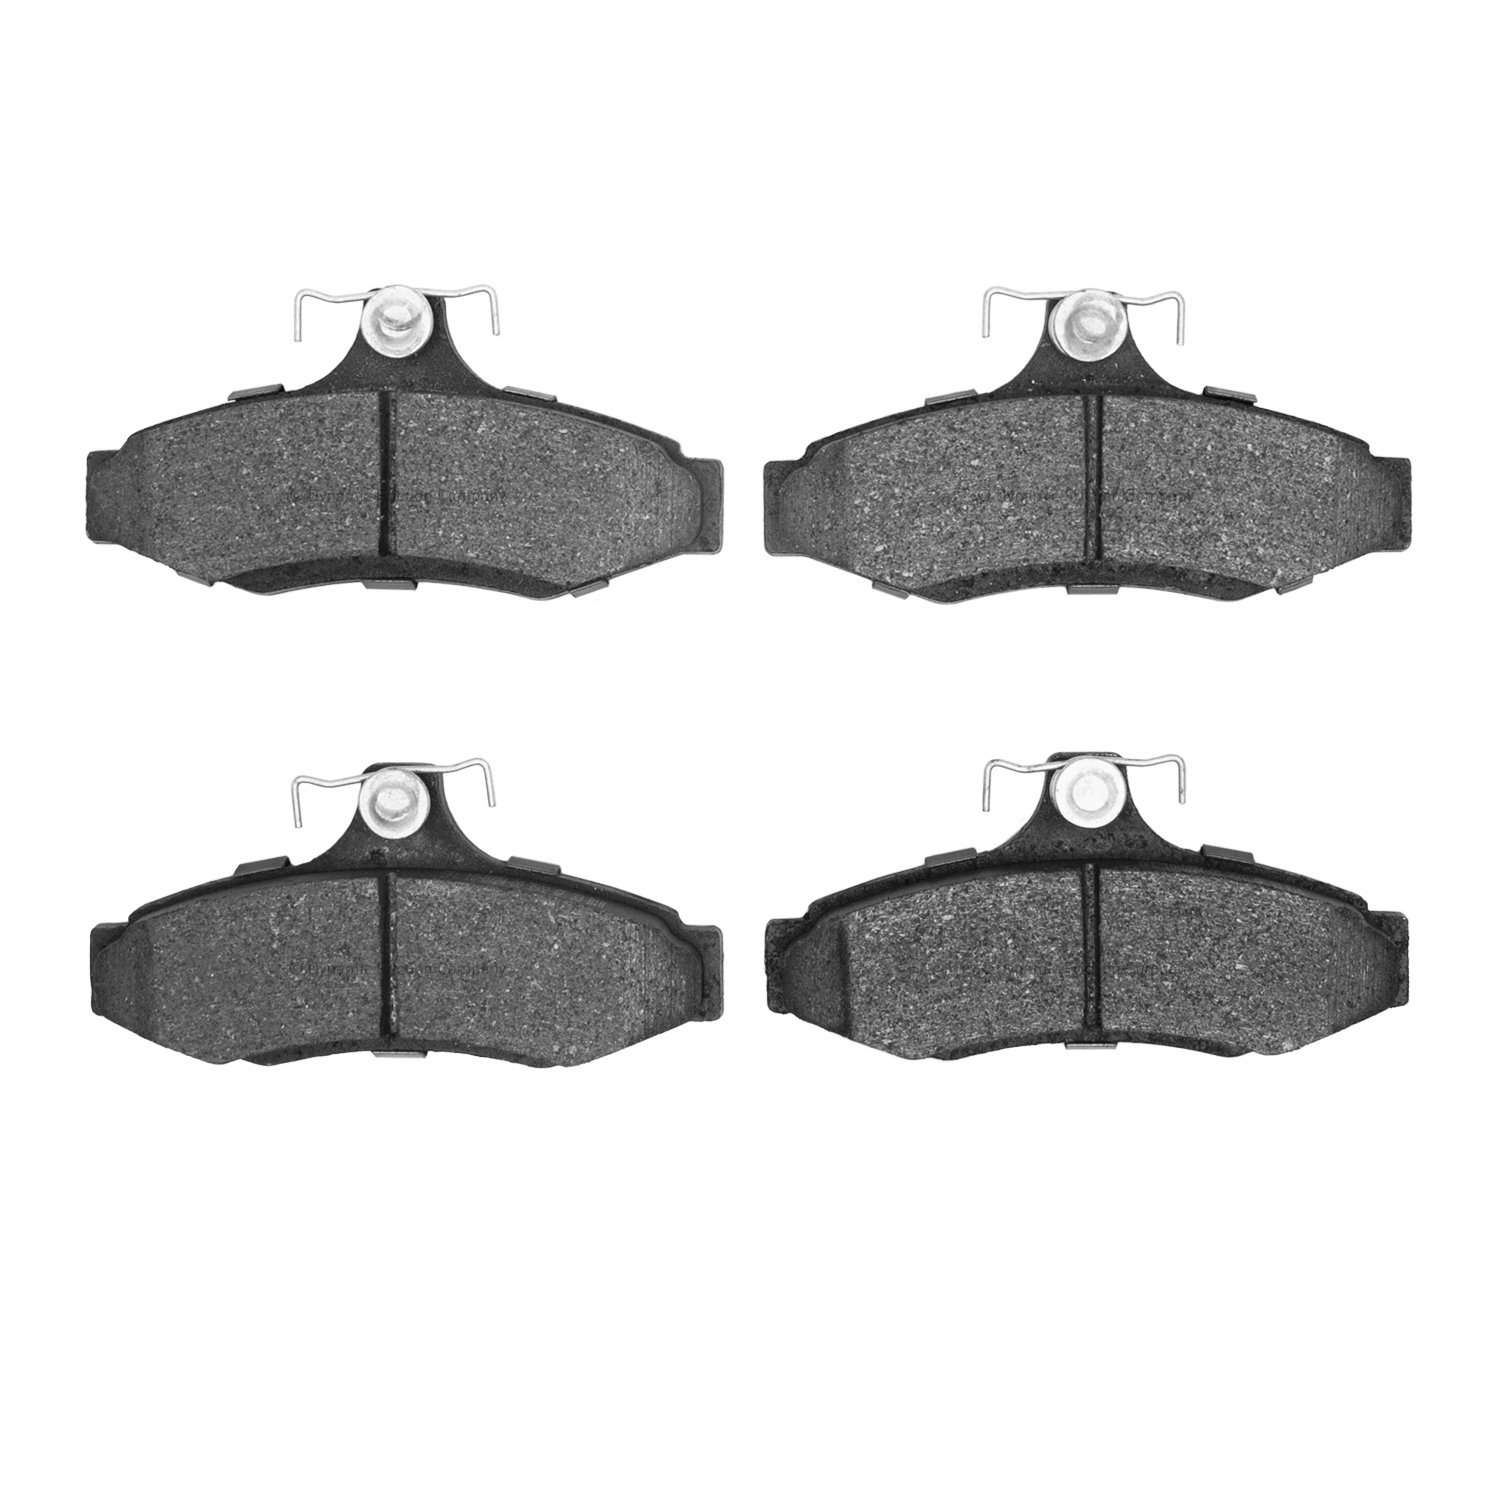 Ceramic Brake Pads, 1997-2004 Fits Multiple Makes/Models, Position: Rear